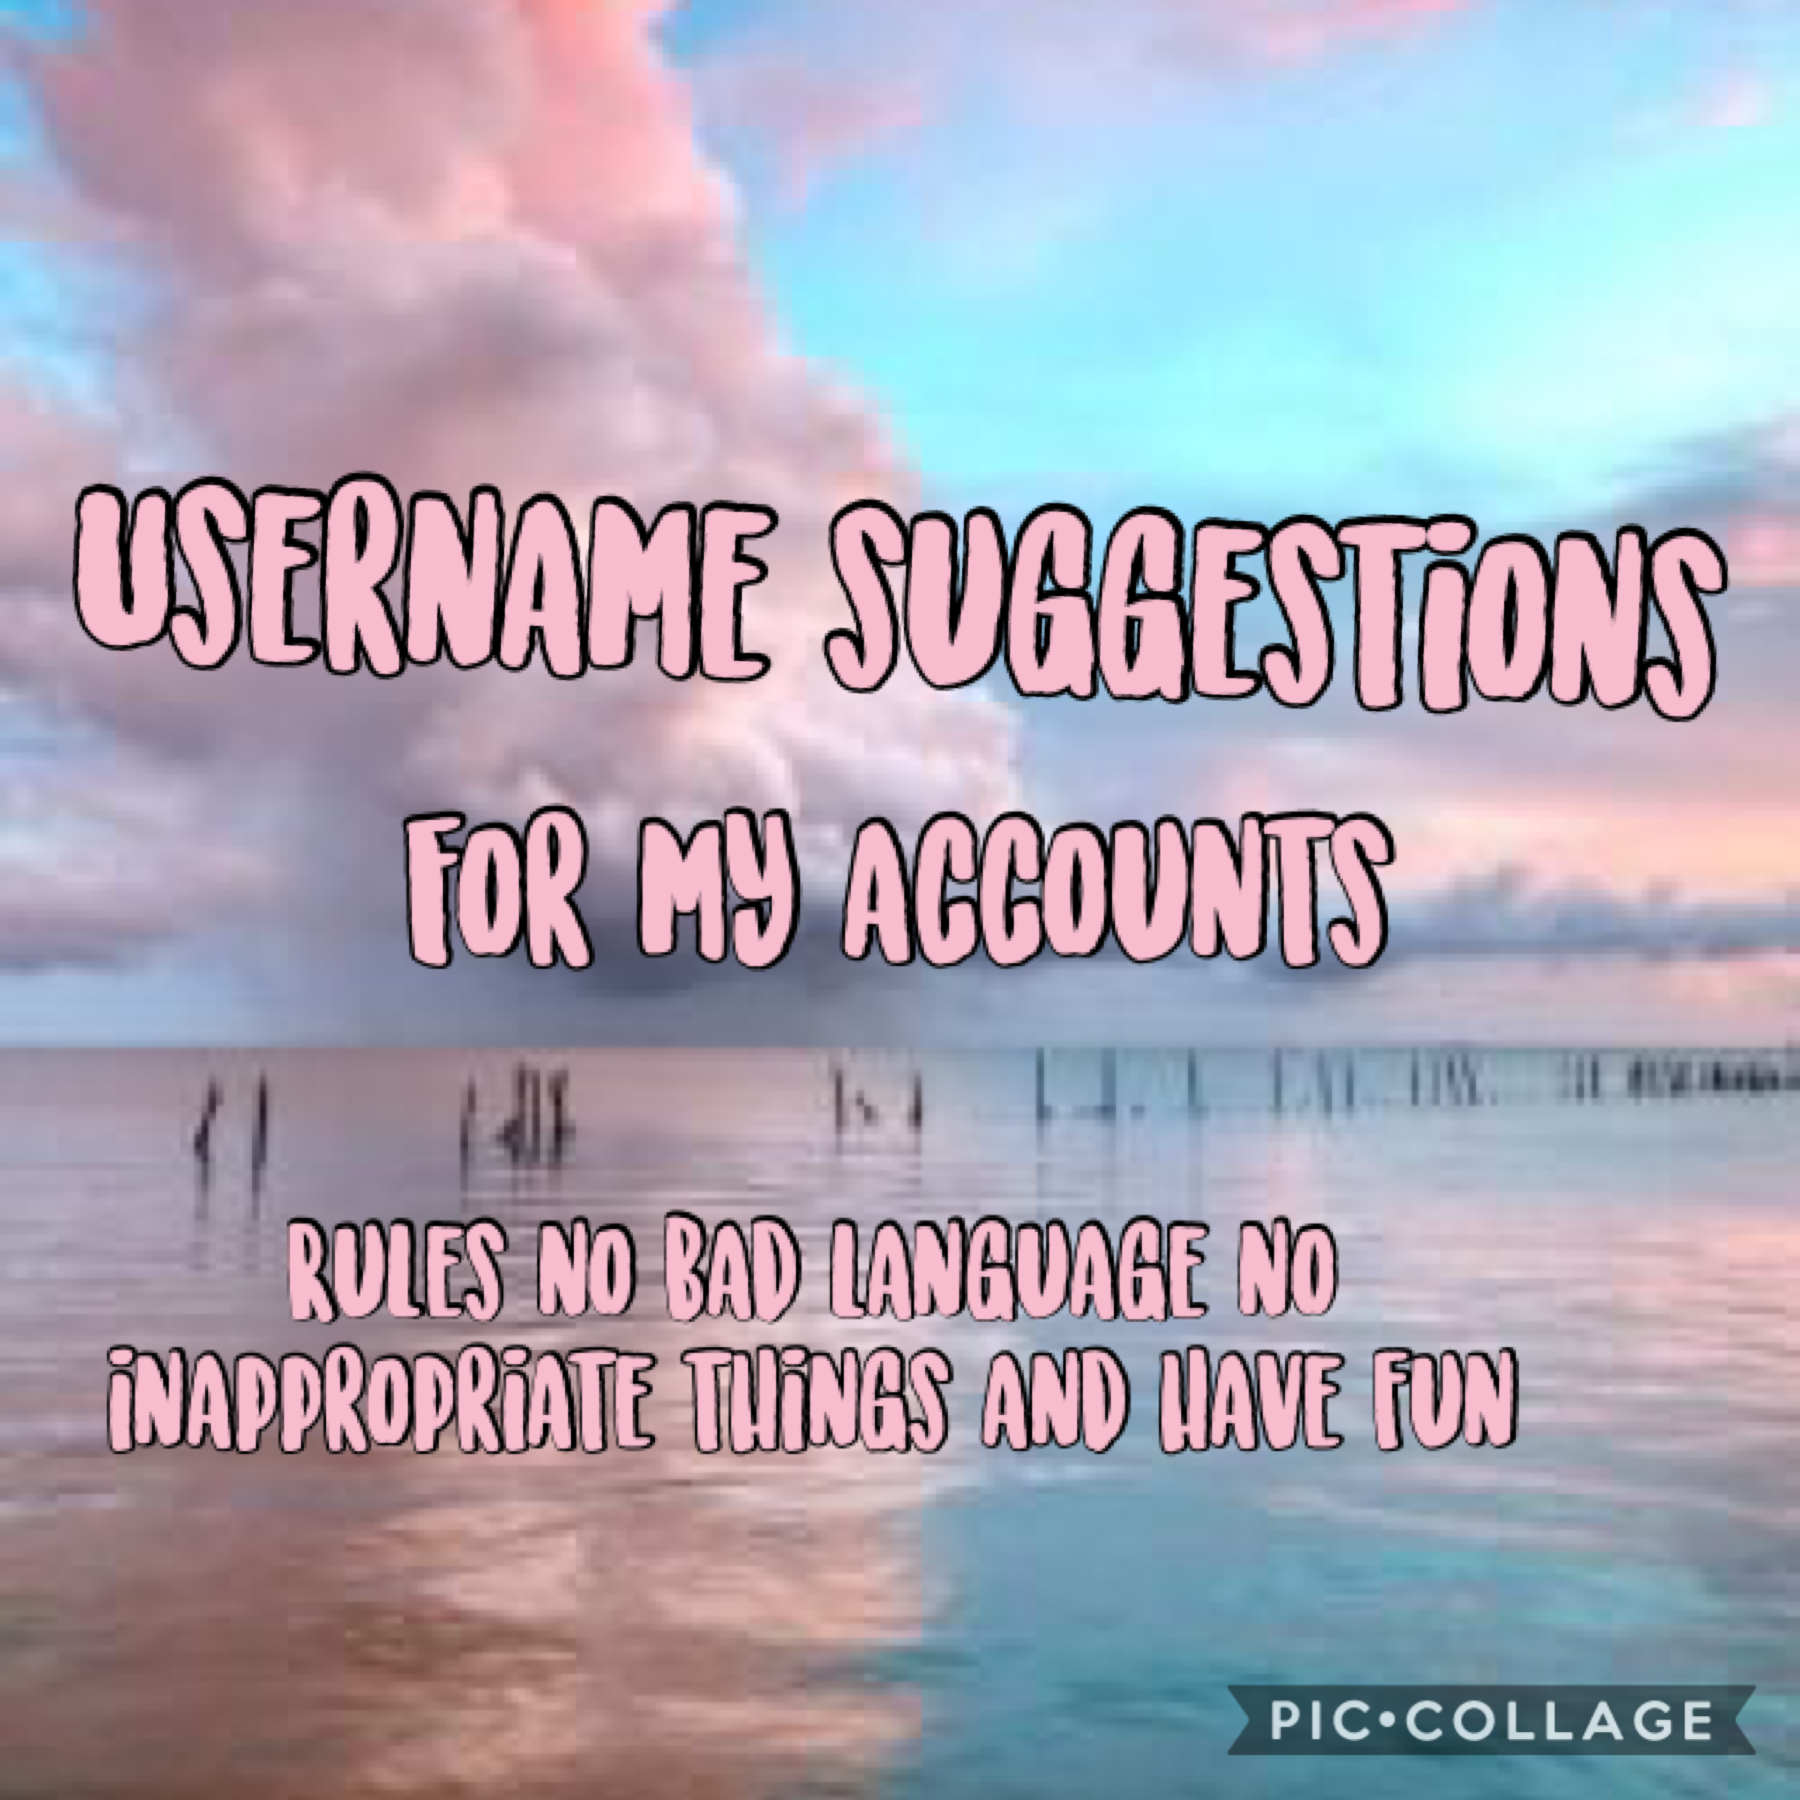 Username suggestions 